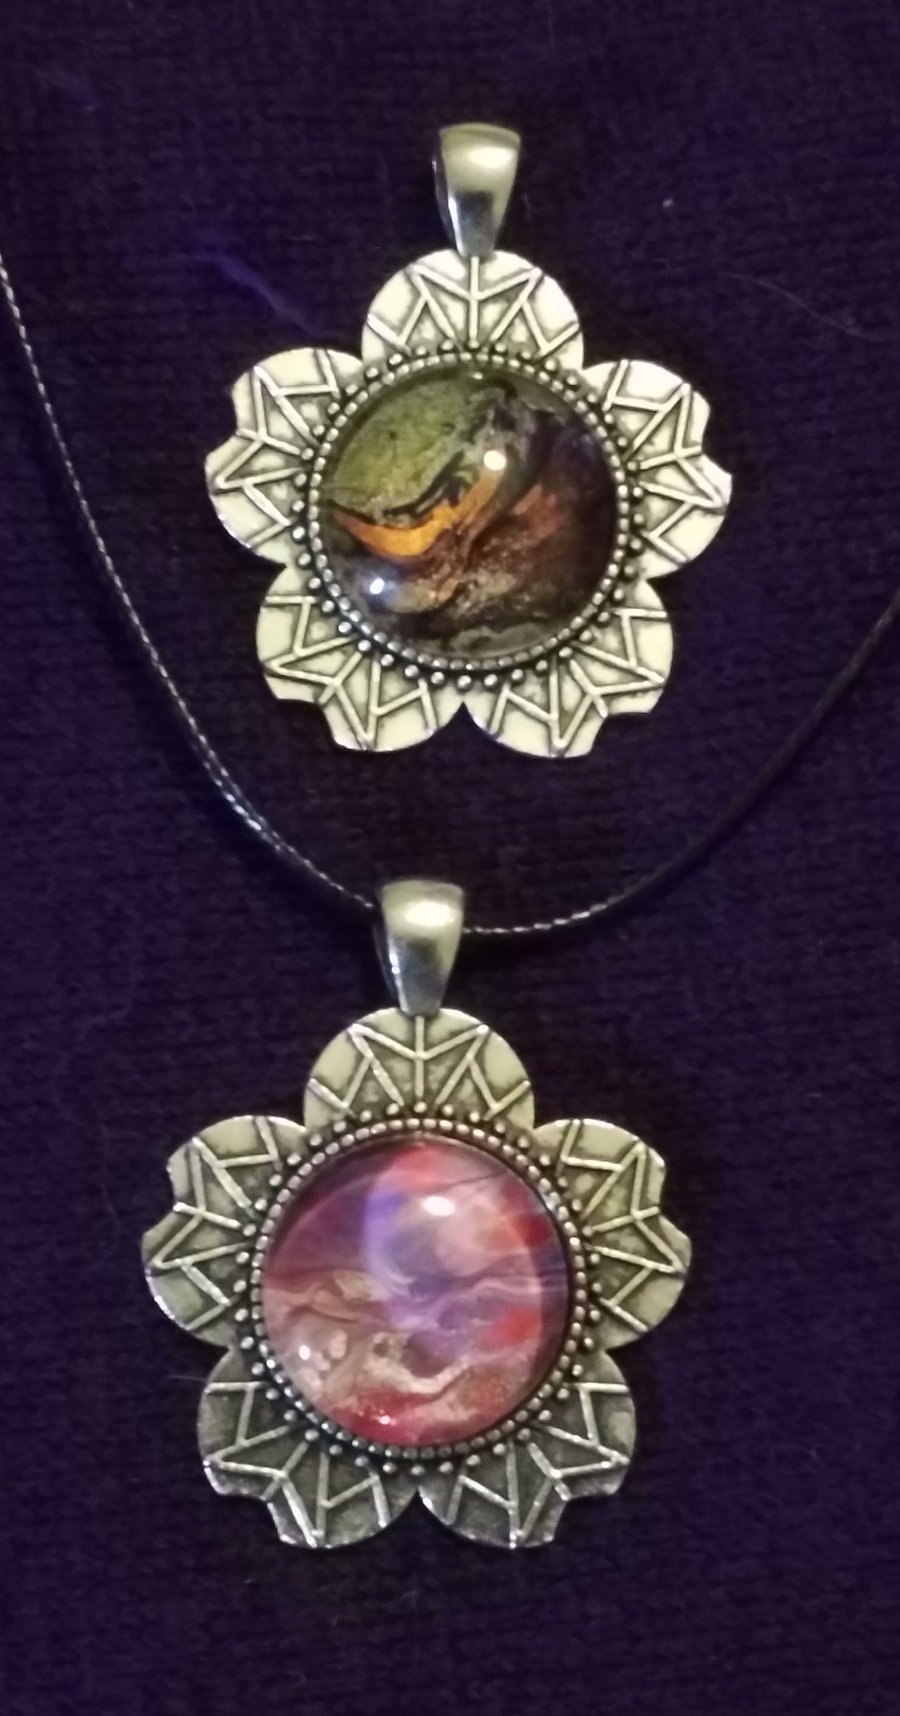 2 for 1 handmade fluid art flower pendants. Copper, red, purple, black and gold.